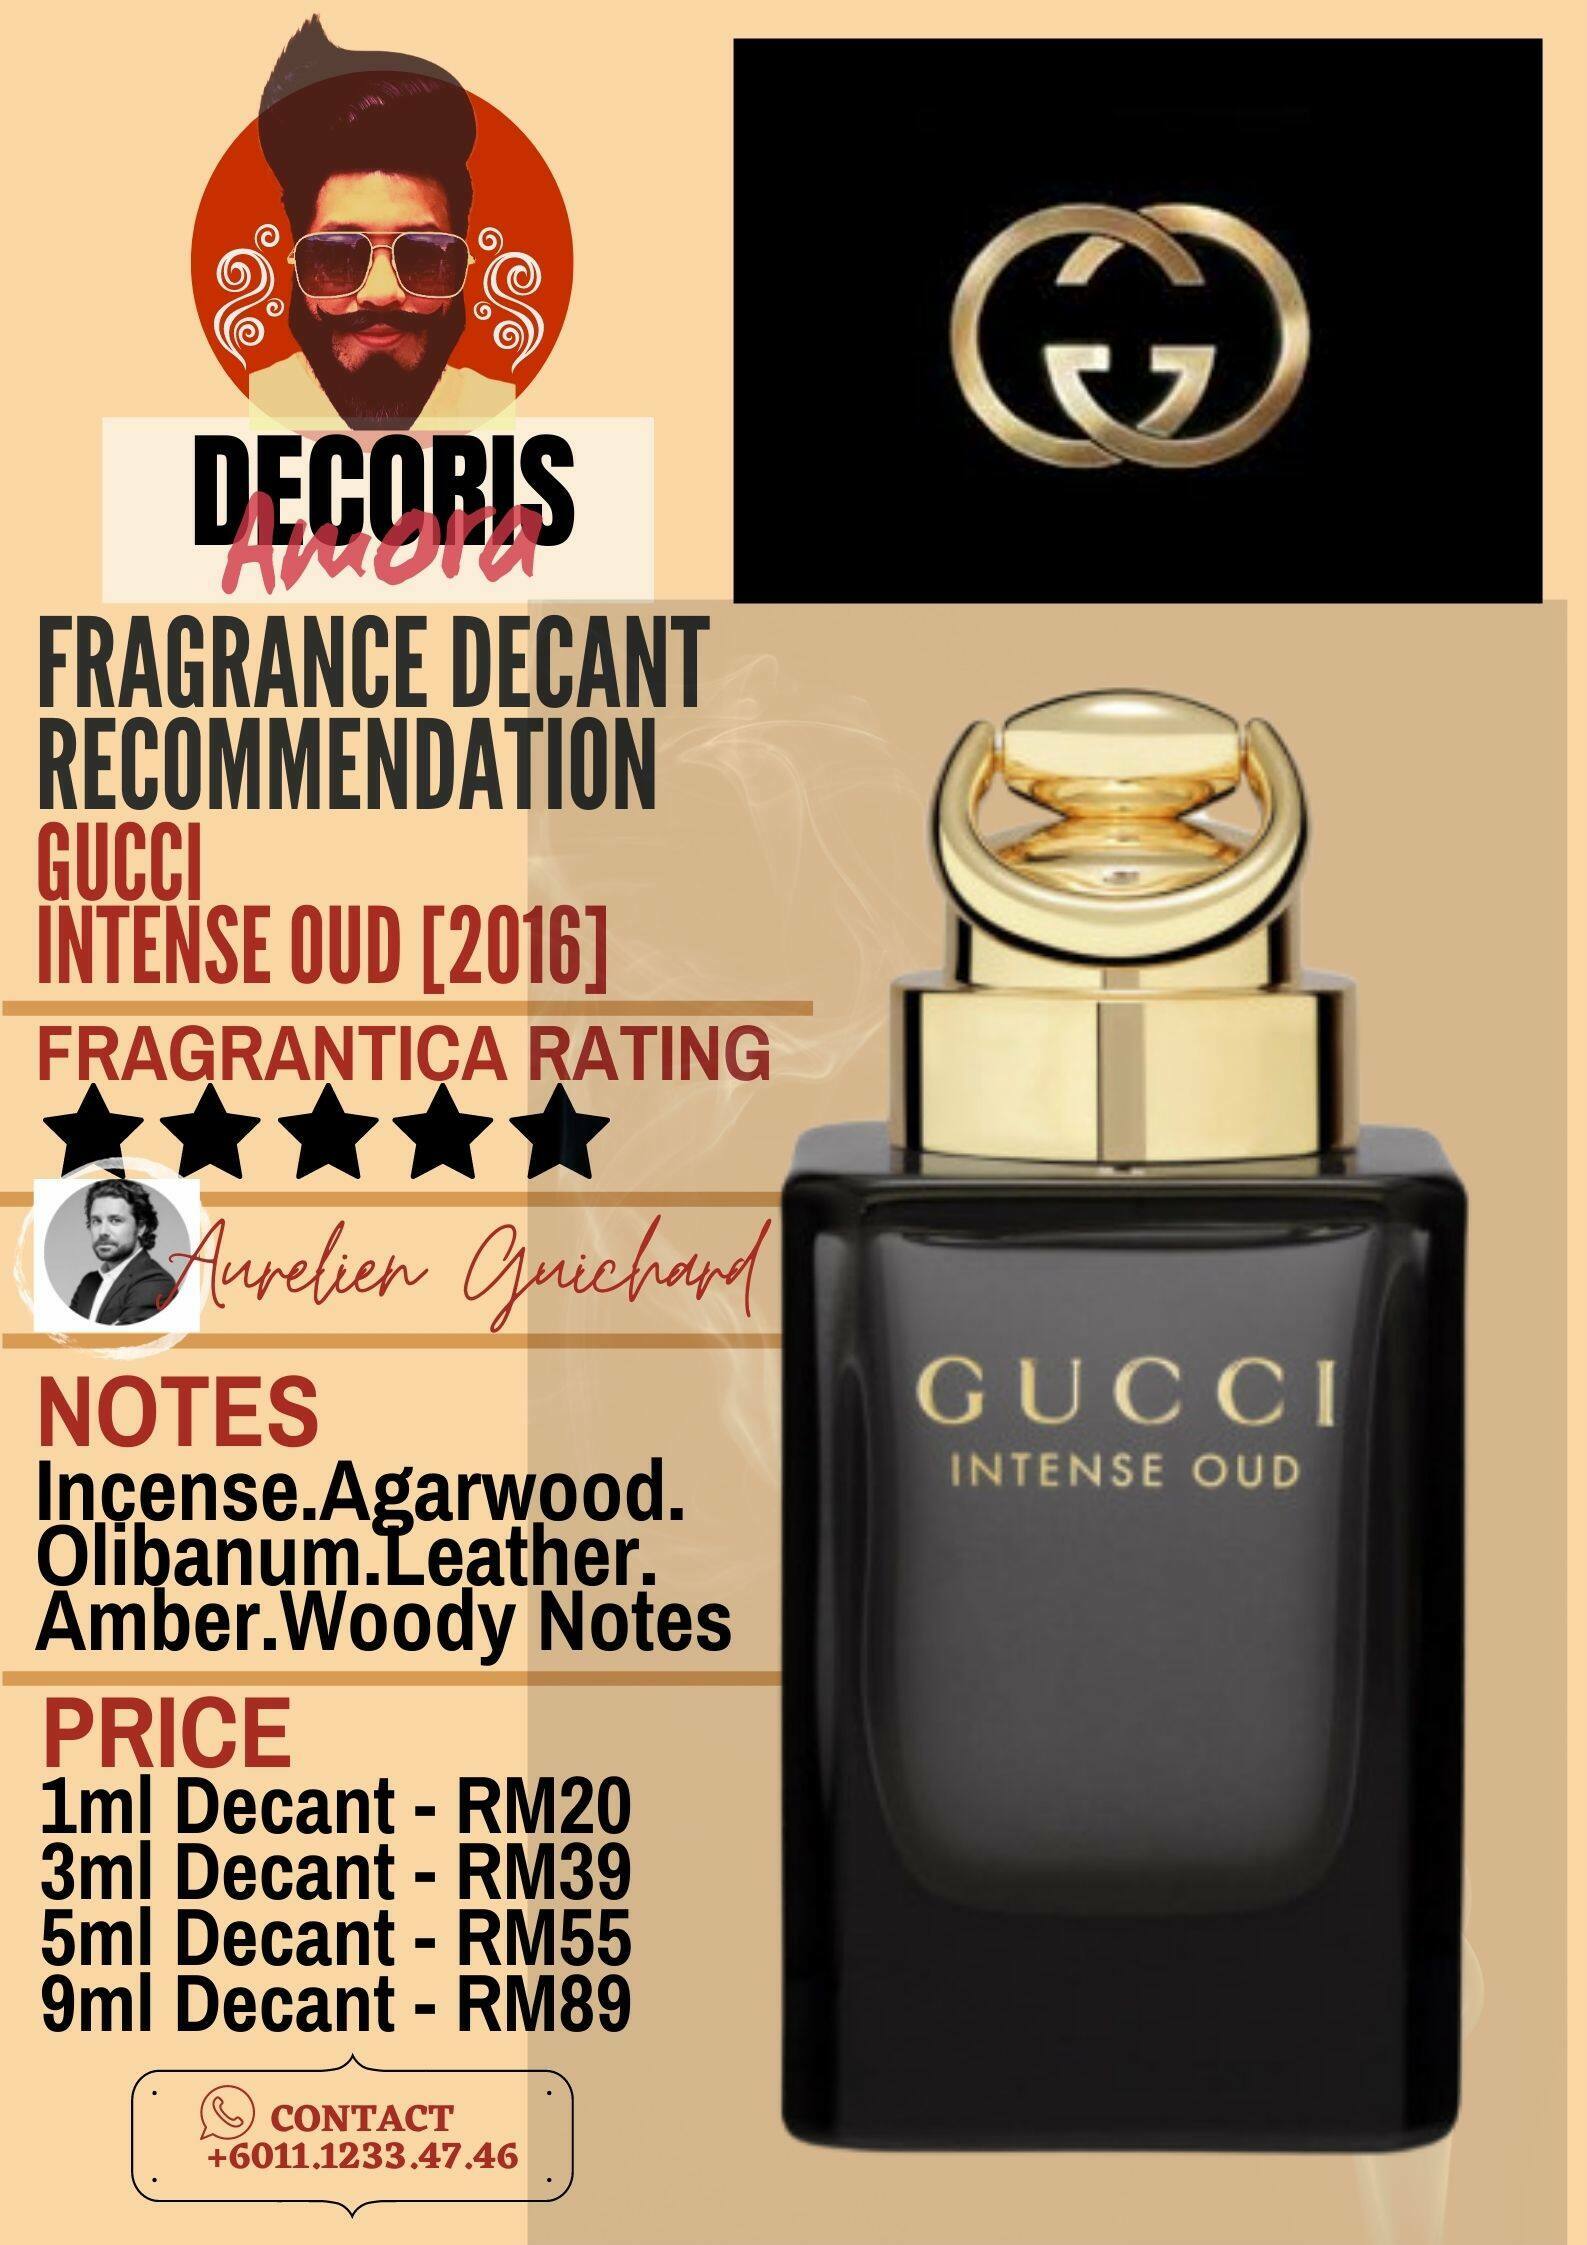 Gucci Intense Oud - Perfume Decant – Decoris Amora Perfume Decant